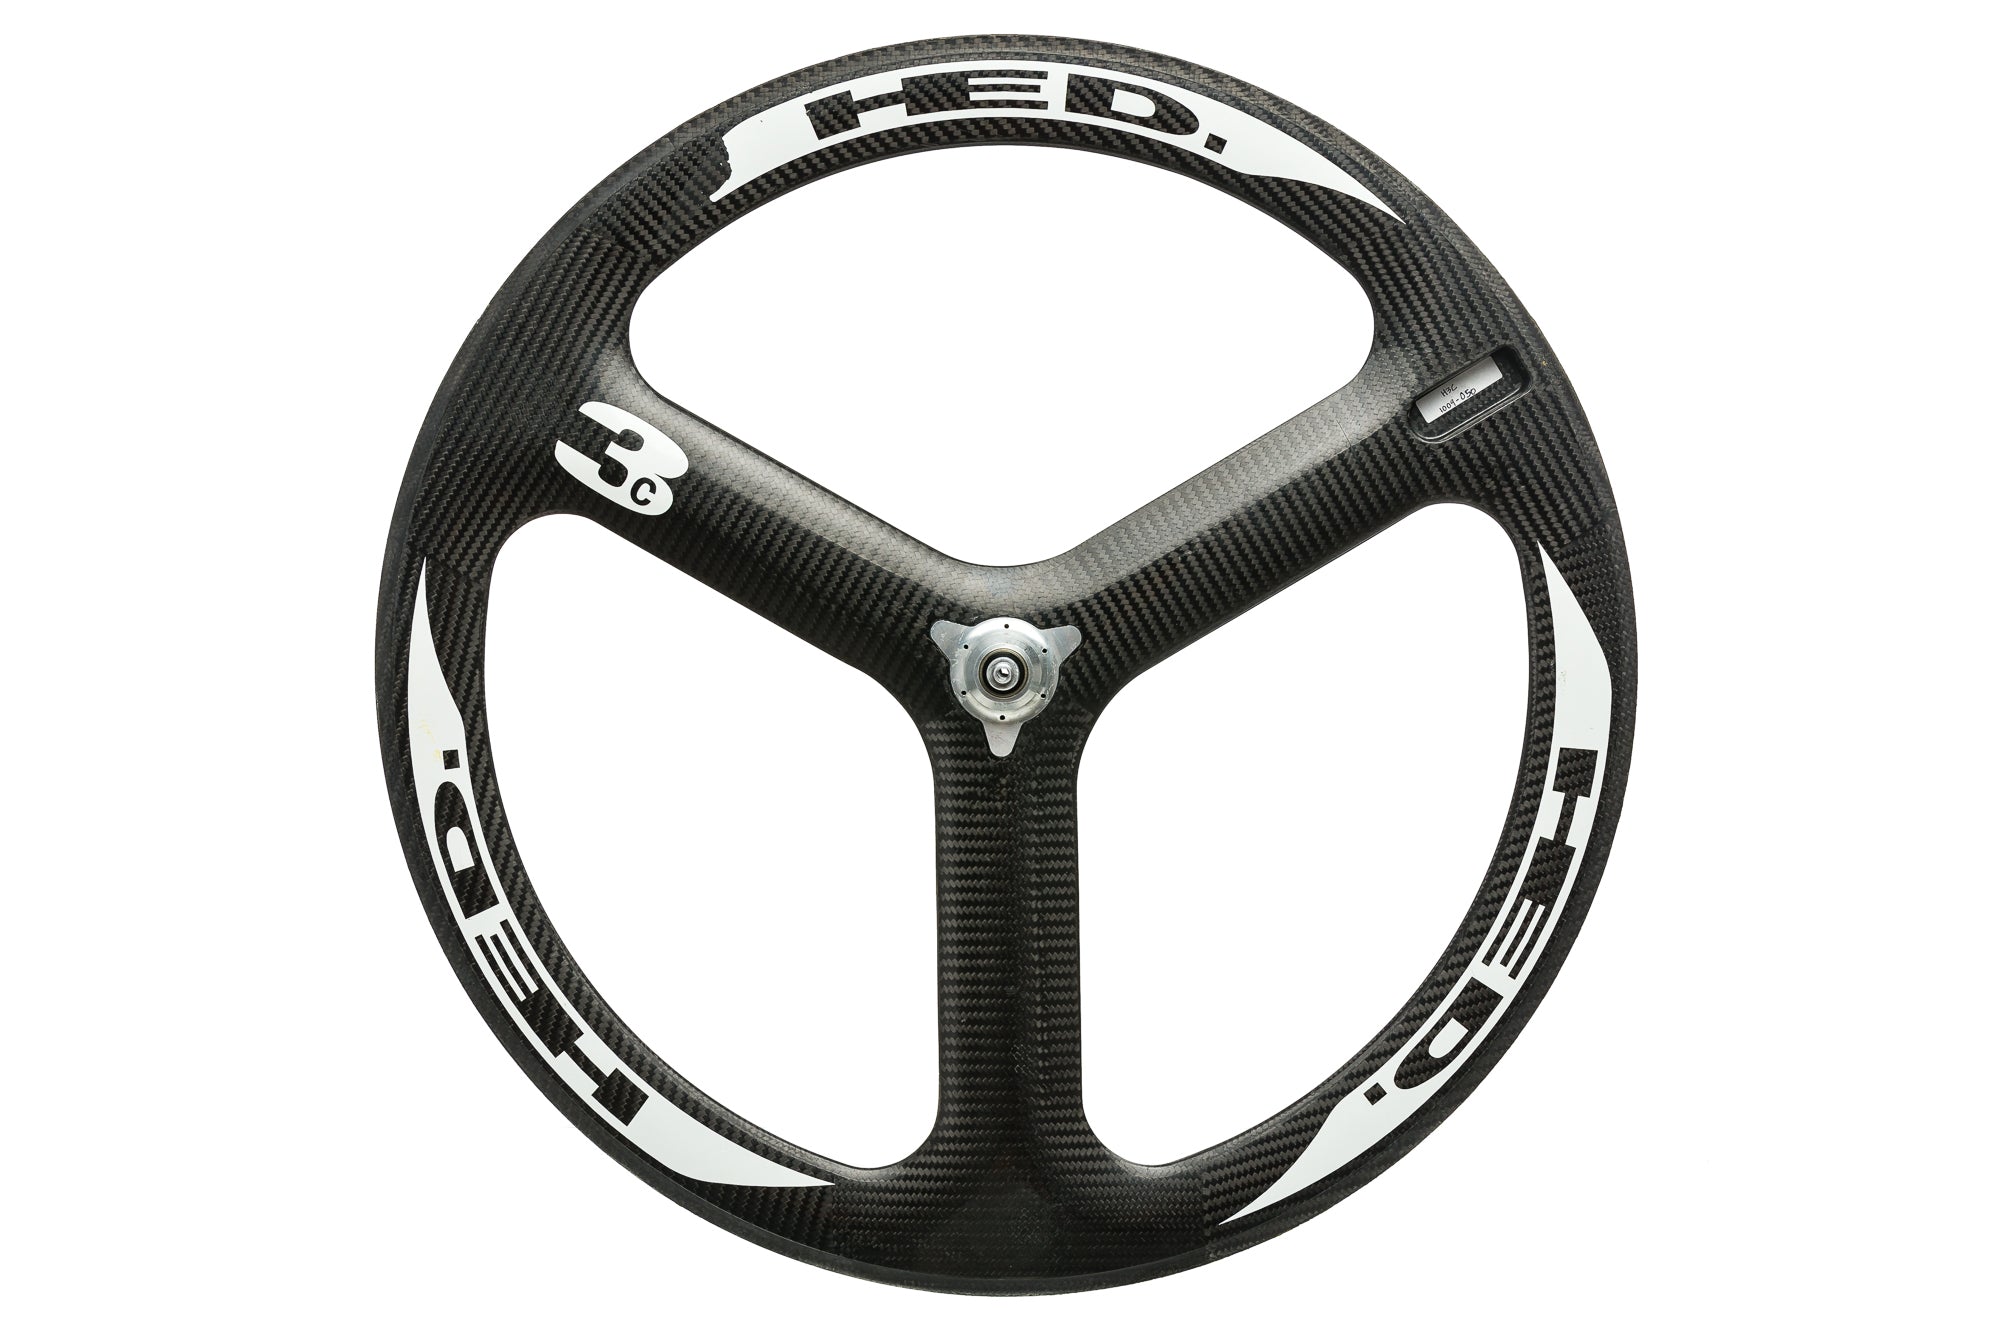 HED 3C Trispoke Carbon Tubular 700c Front Wheel non-drive side